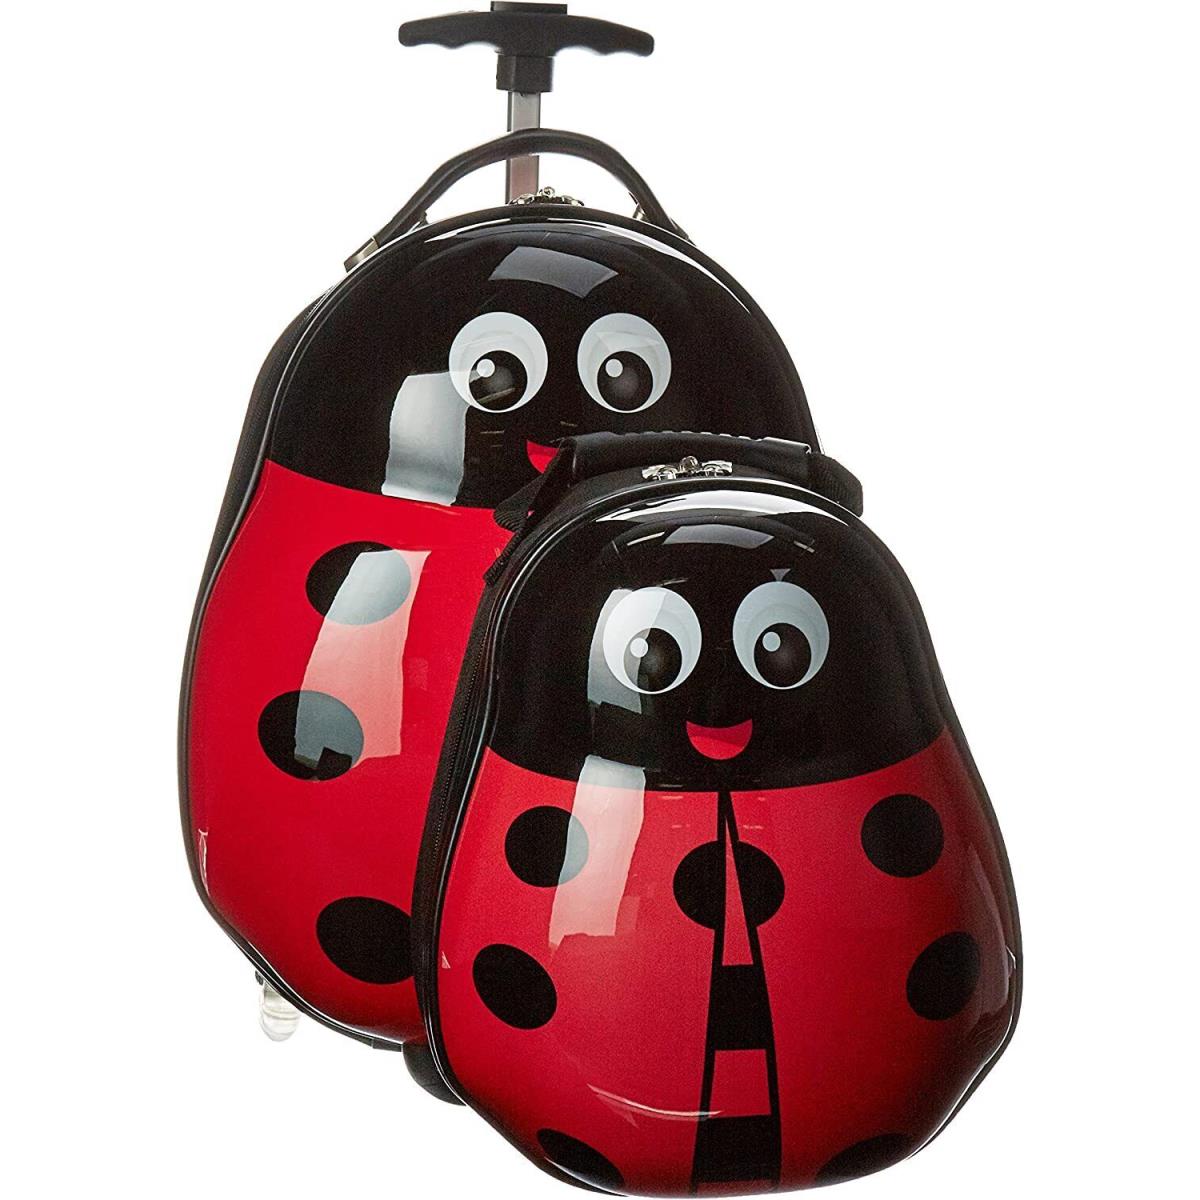 Heys Travel Tots Kids Multicolored All Overprinted 2 Piece Luggage Set - Ladybug